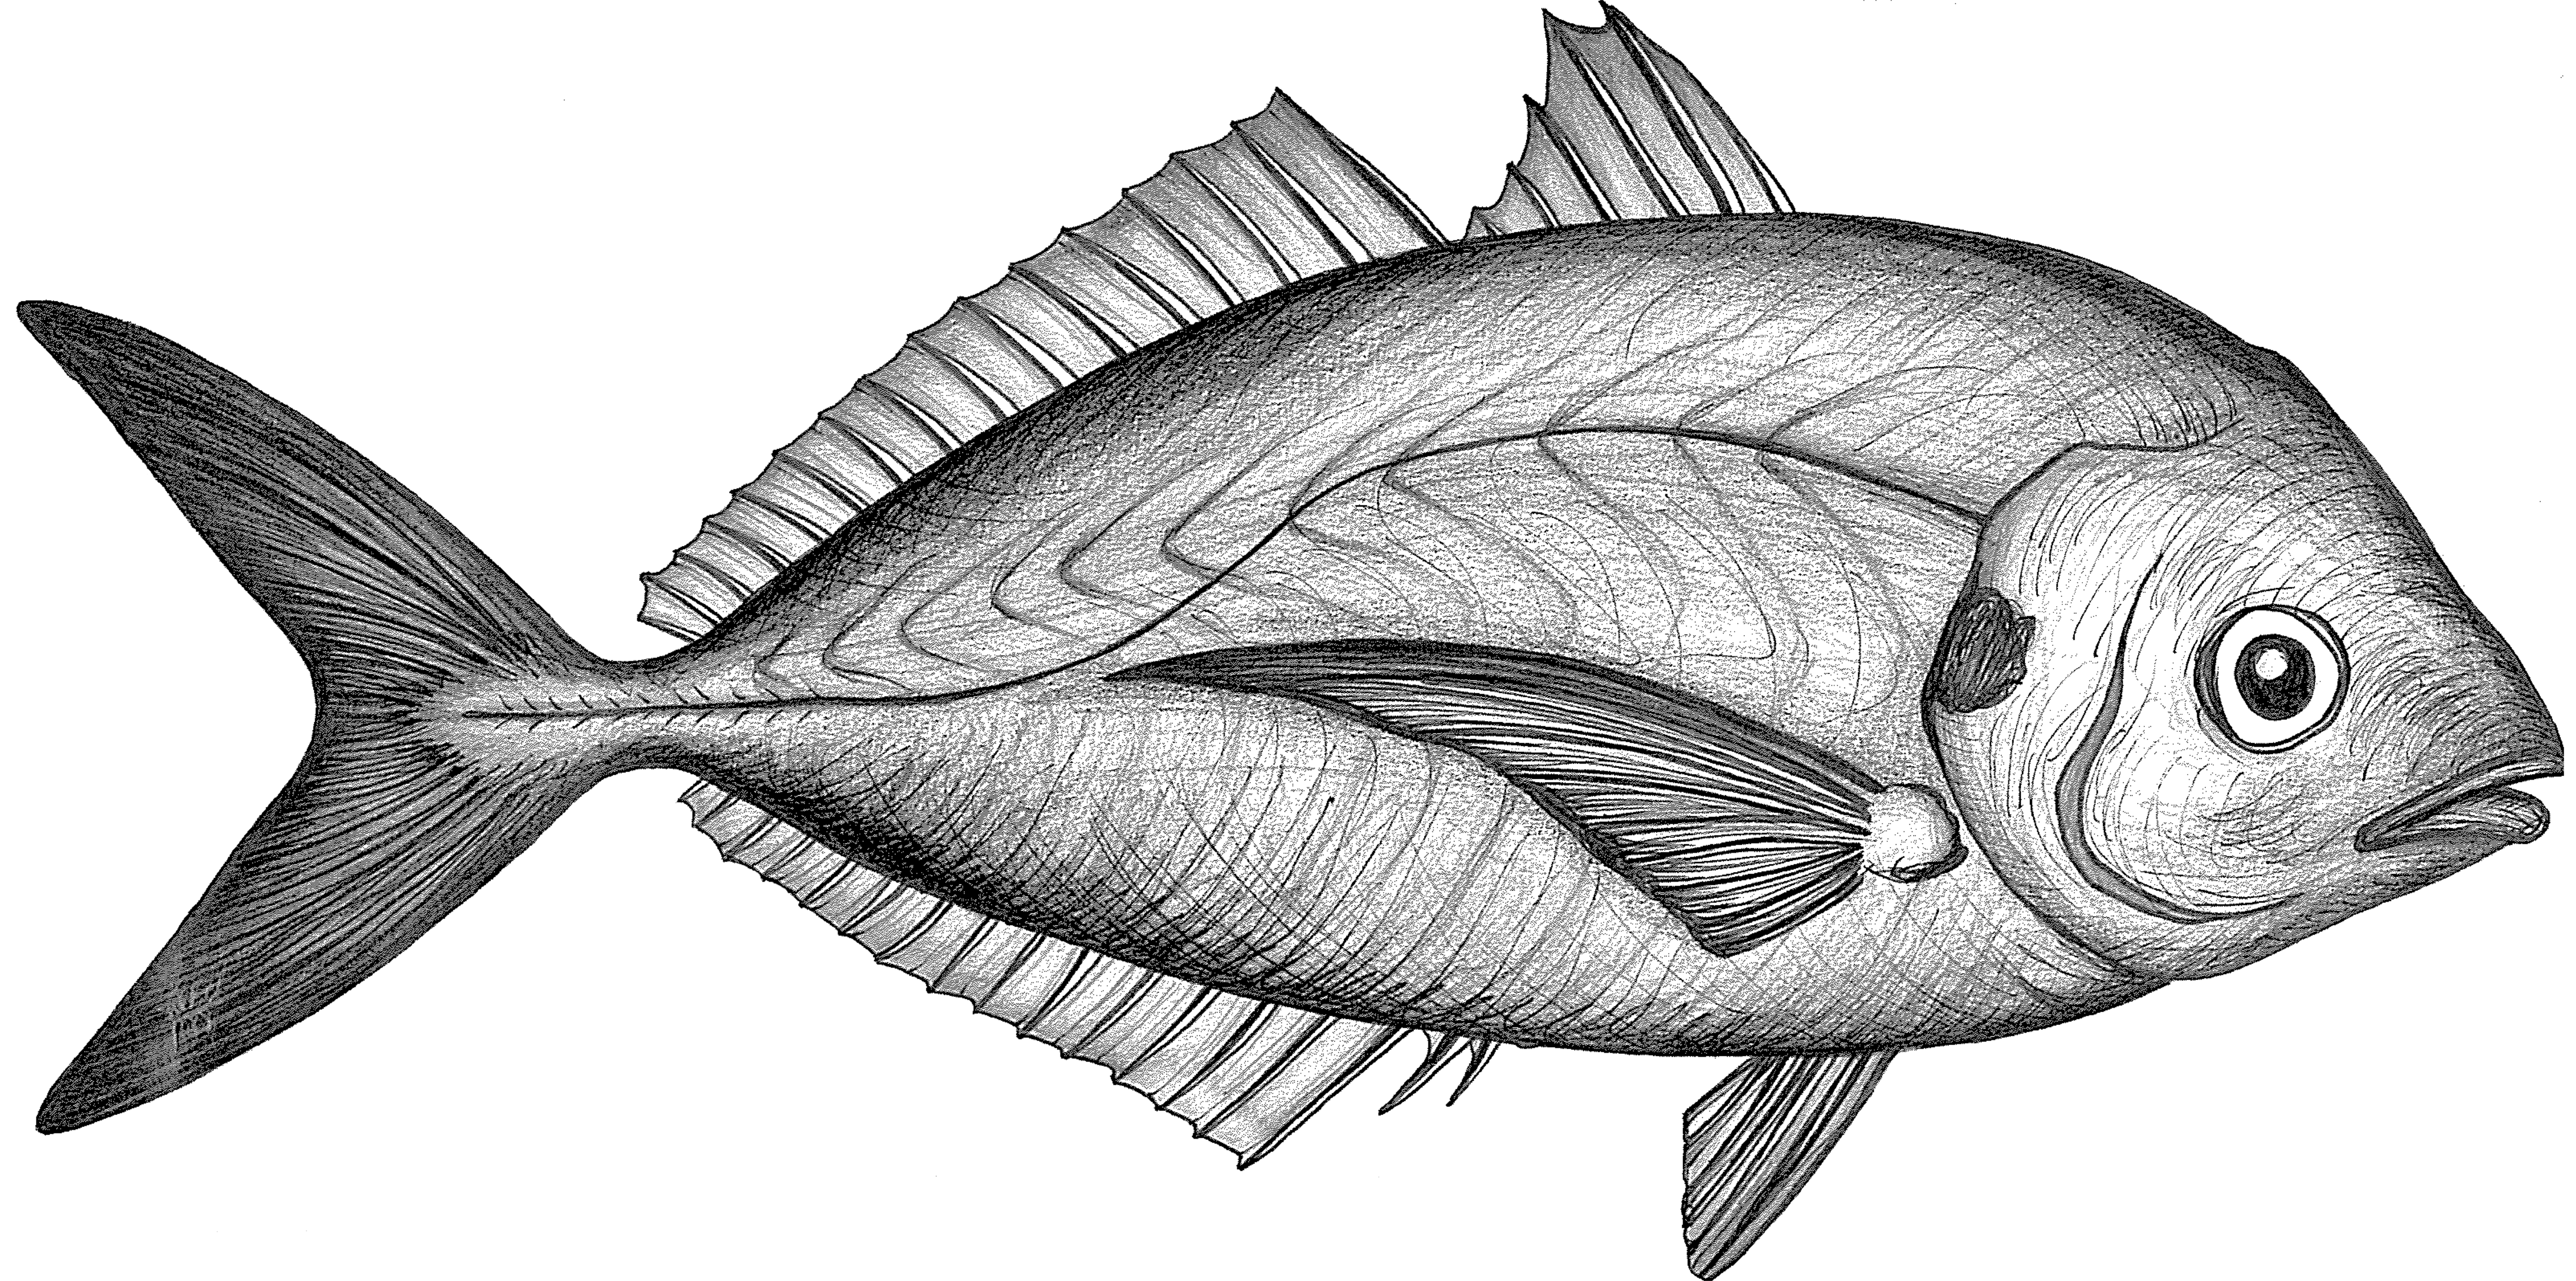 Trevally *Pseudocaranx georgianus* illustration by Leah Kemp.